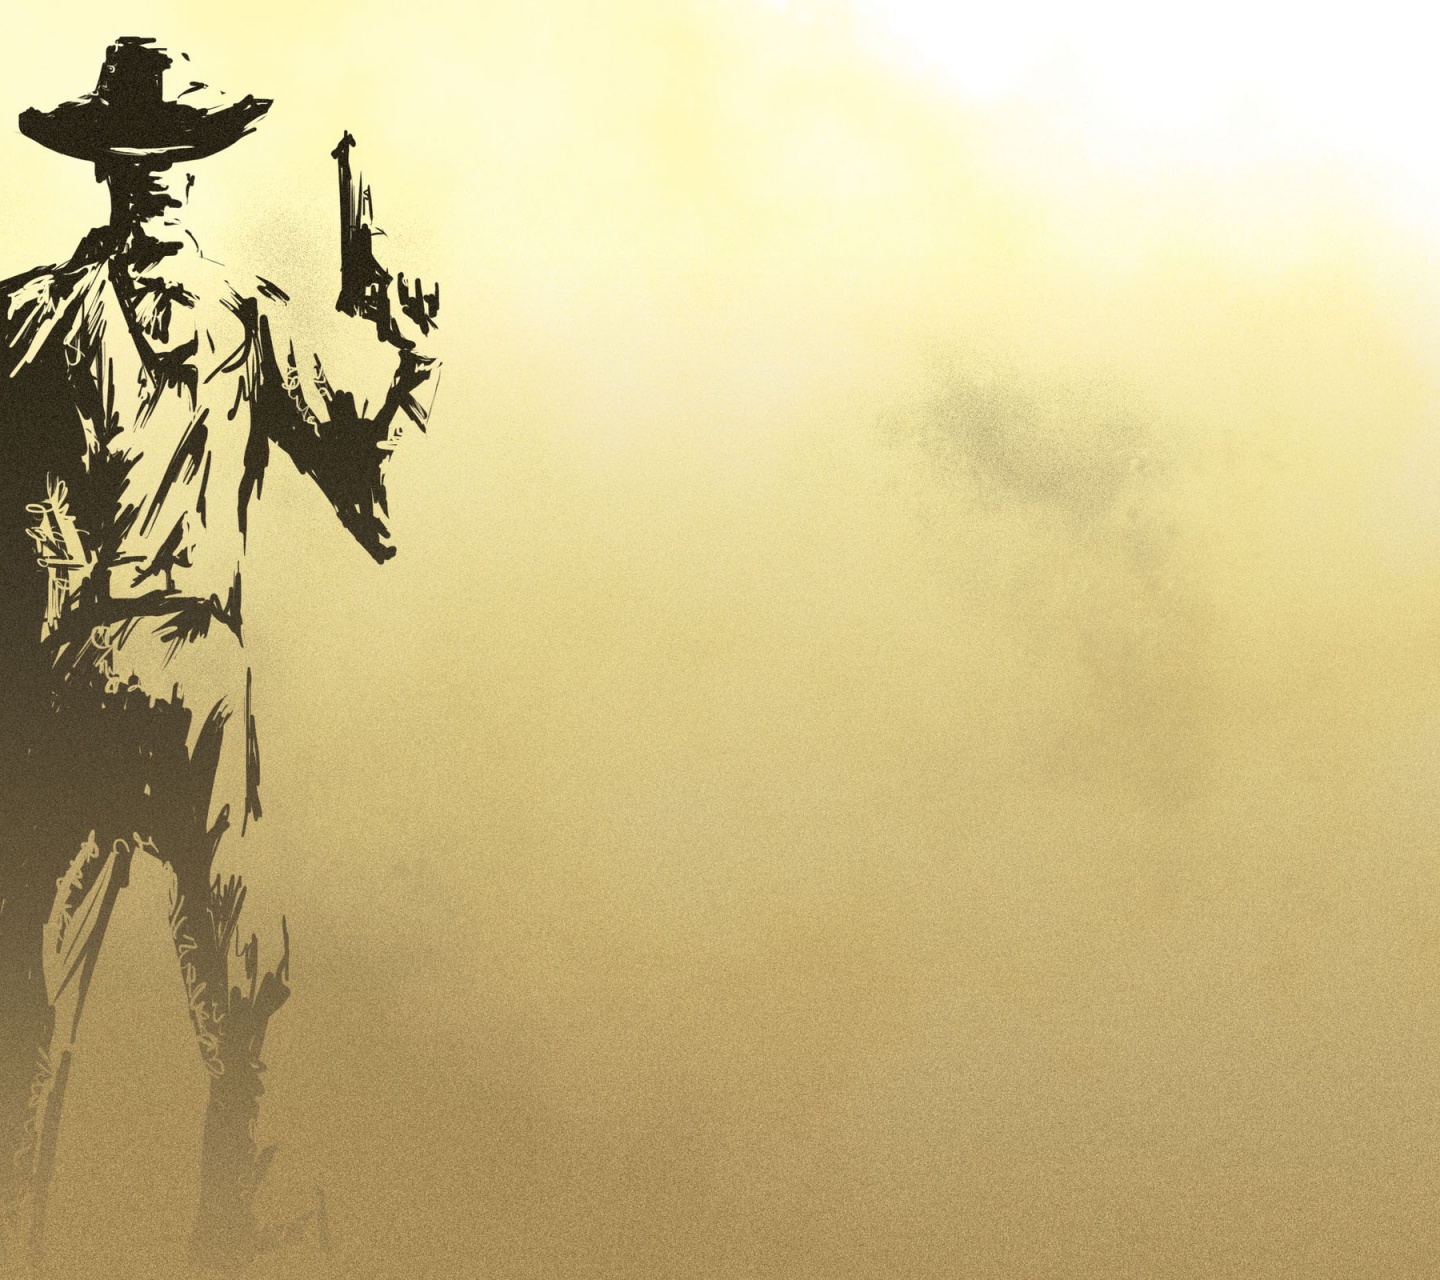 Man Cowboy Guns Wallpaper